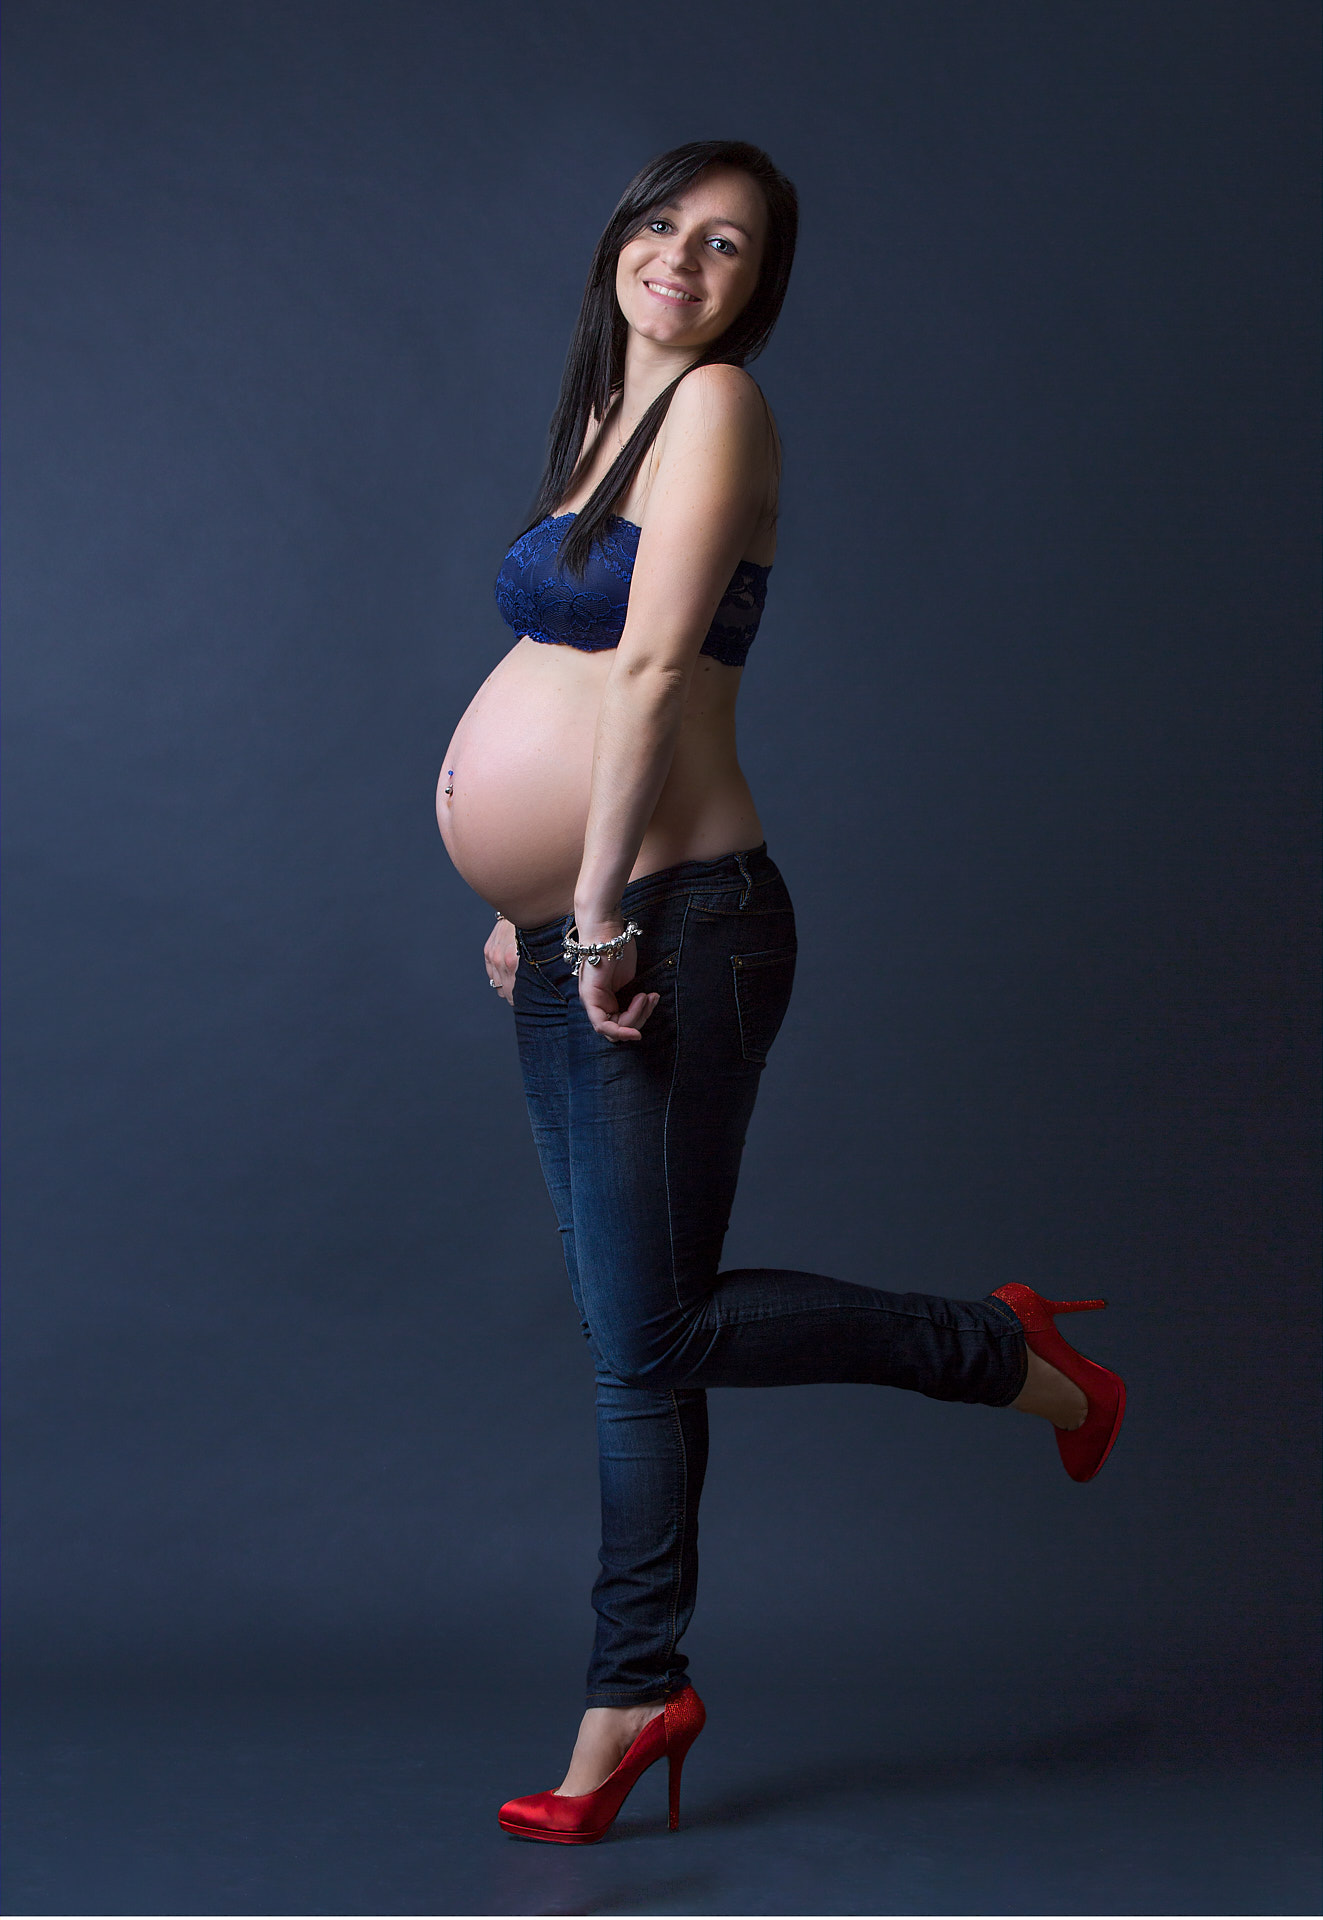  photo femme enceinte grenoble (copie)